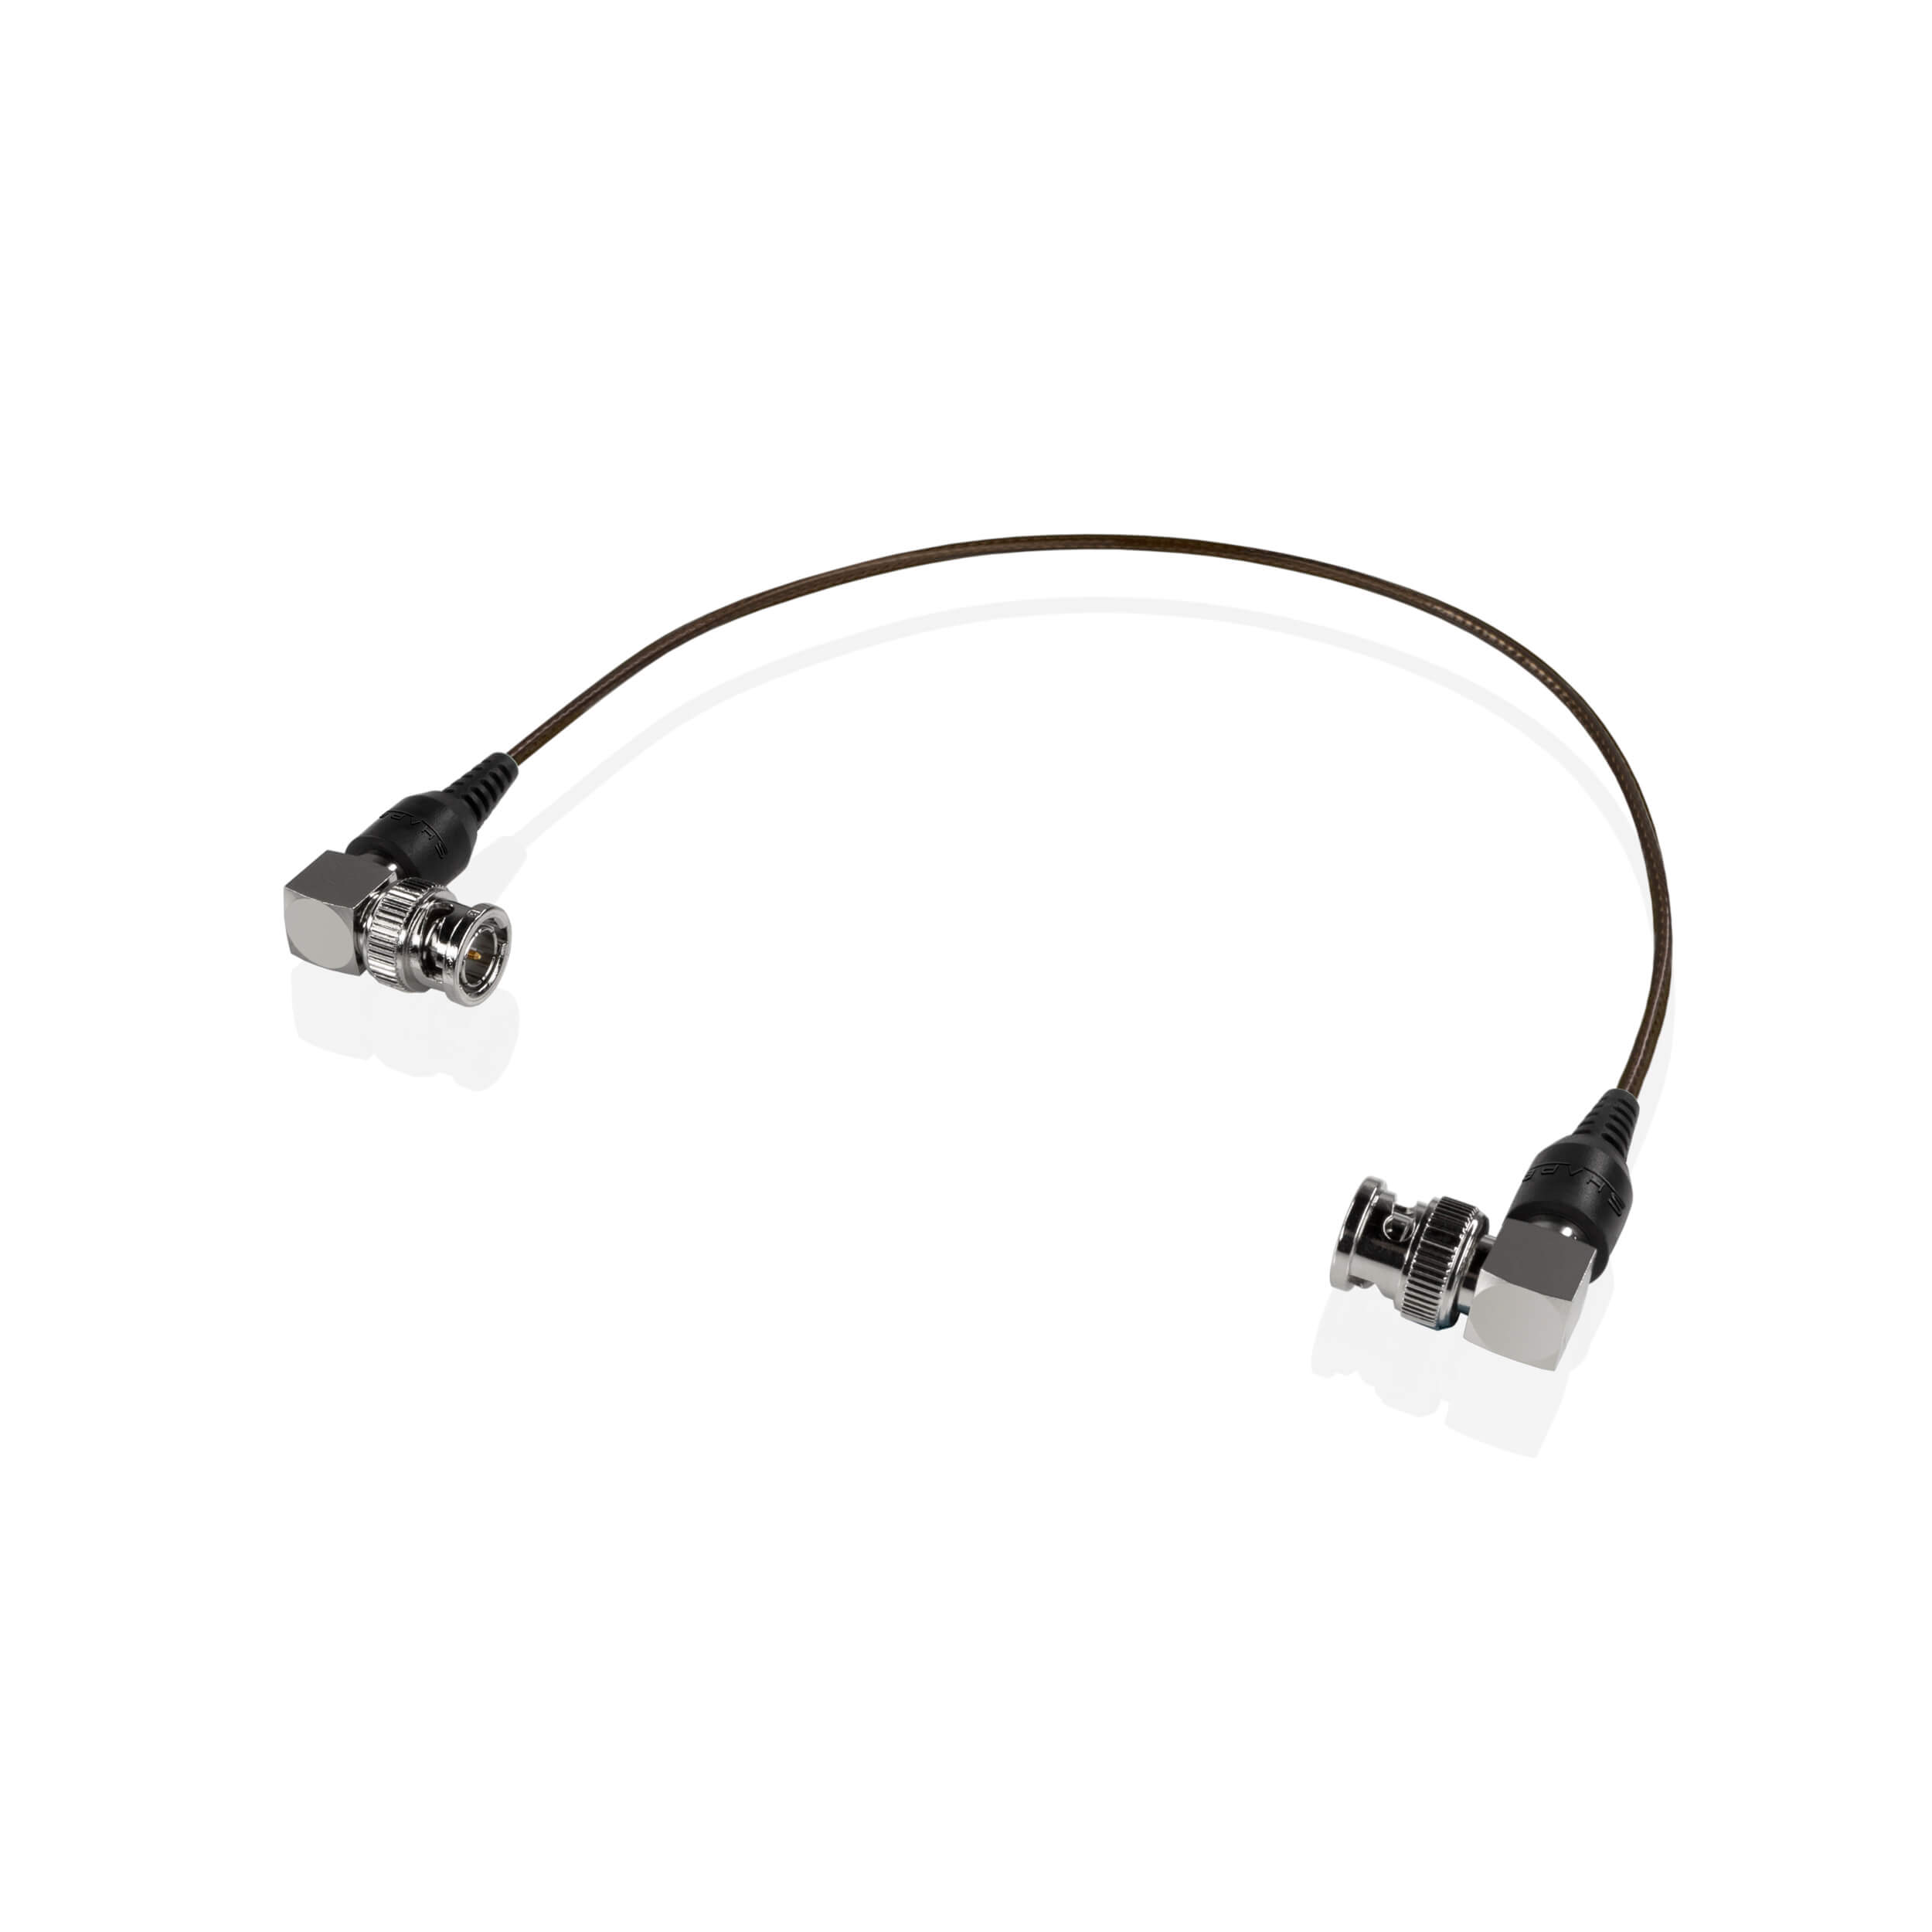 SHAPE Skinny 90° BNC Cable (Black, 12")